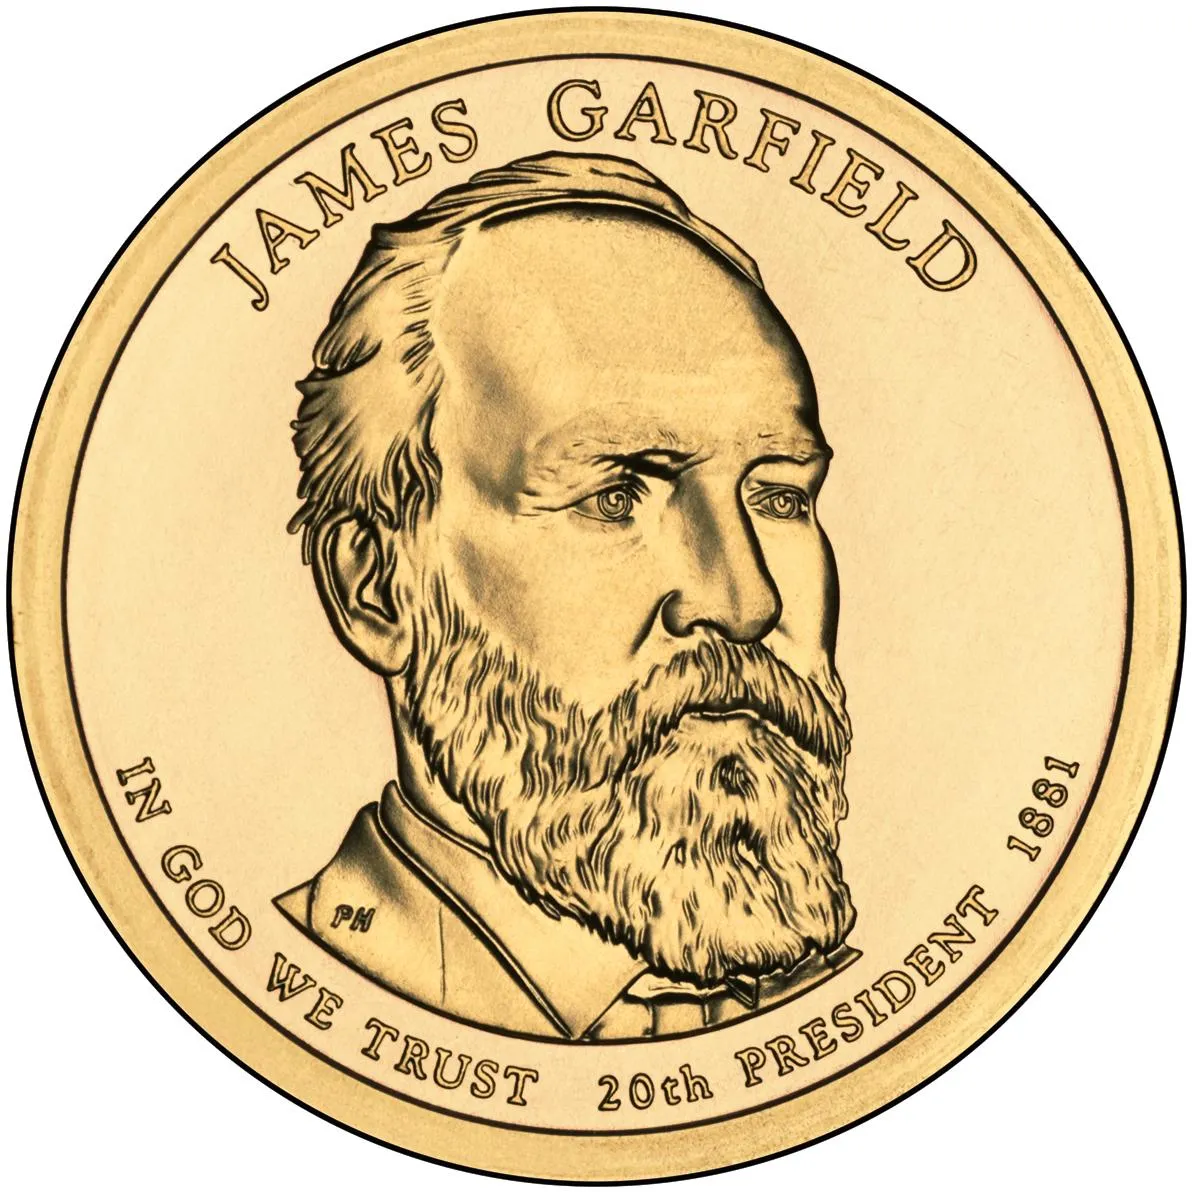 James A Garfield coin